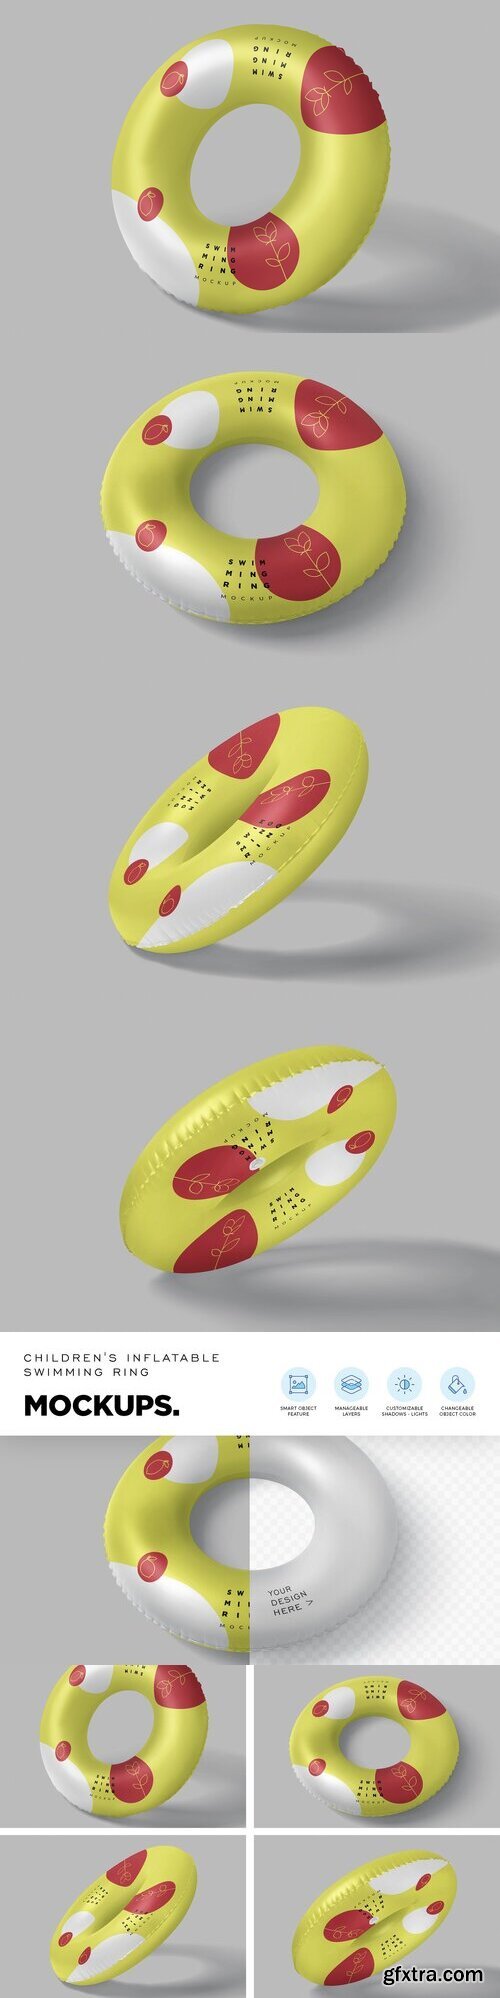 CreativeMarket - Inflatable Ring Mockups 6907814